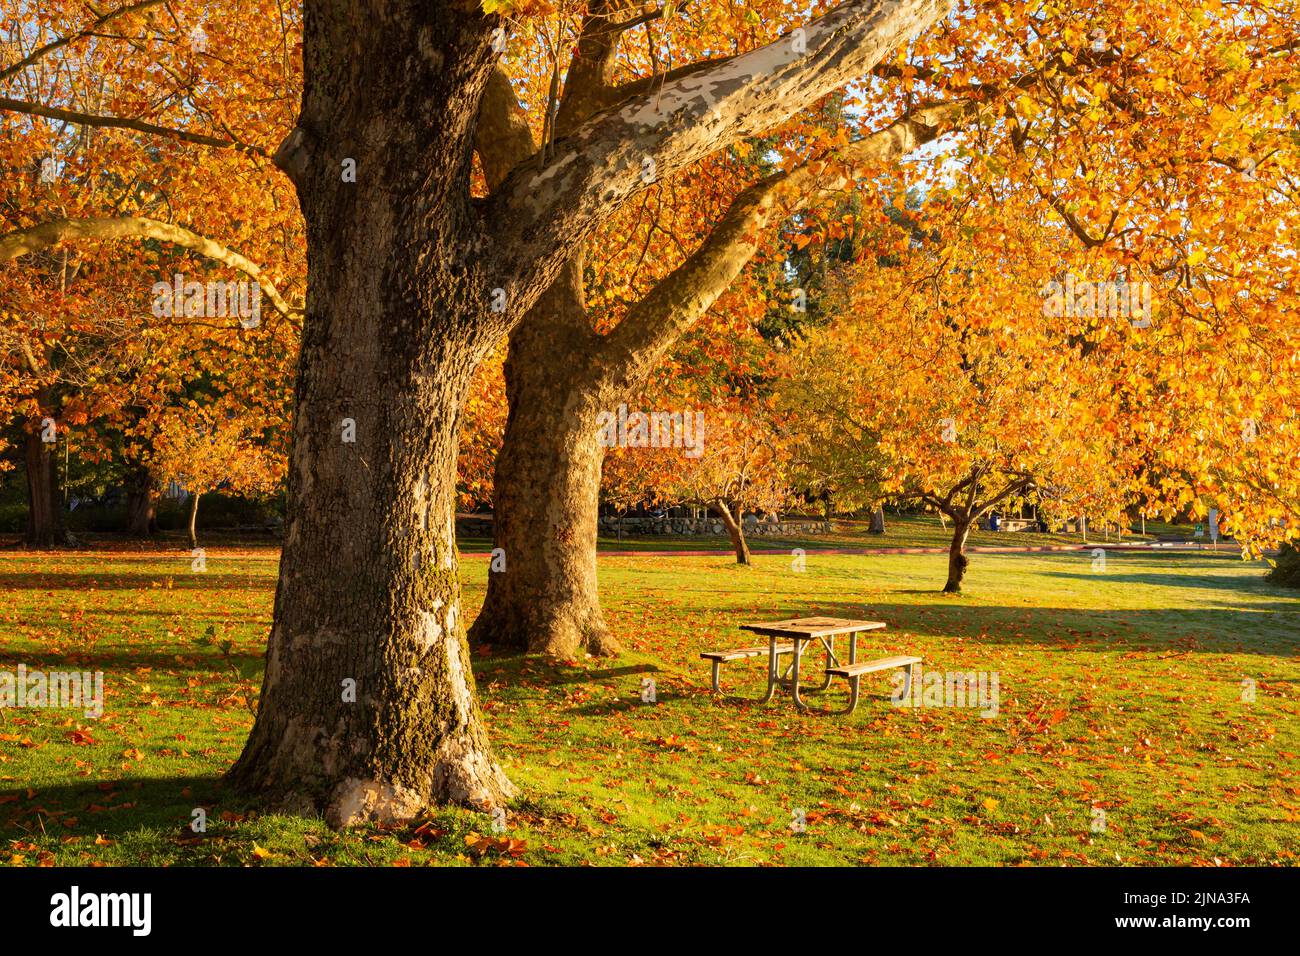 WA21876-00...WASHINGTON - Fall time at Seward Park in Seattle. Stock Photo